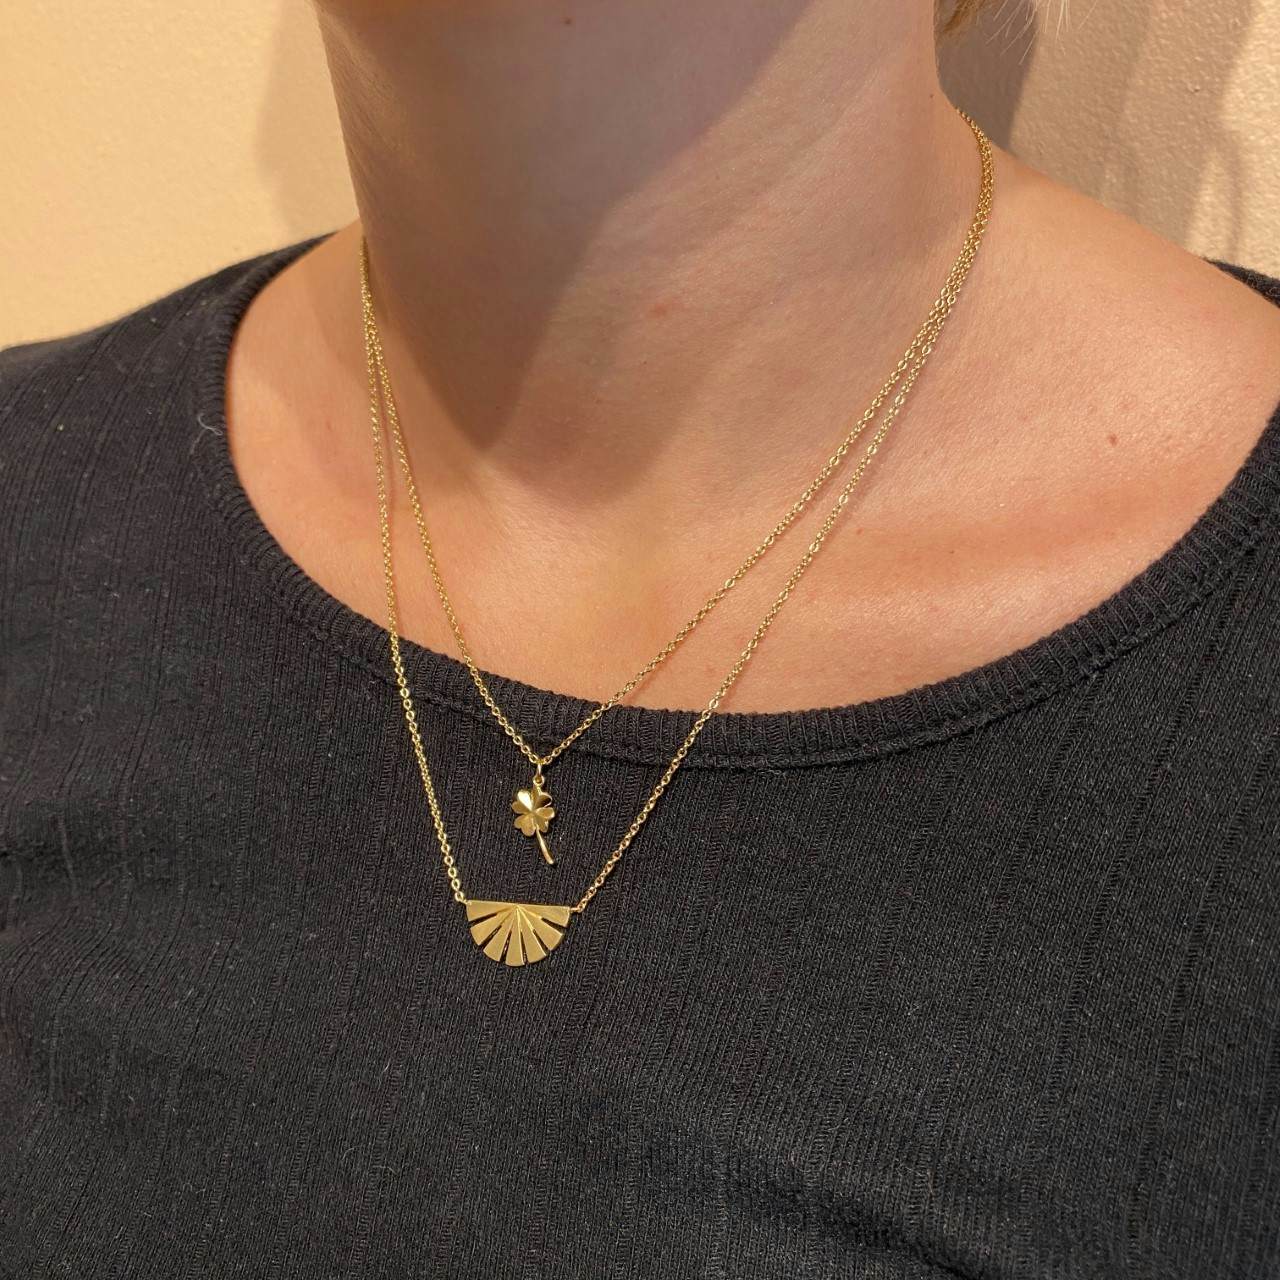 Clover necklace från Pernille Corydon i Silver Sterling 925